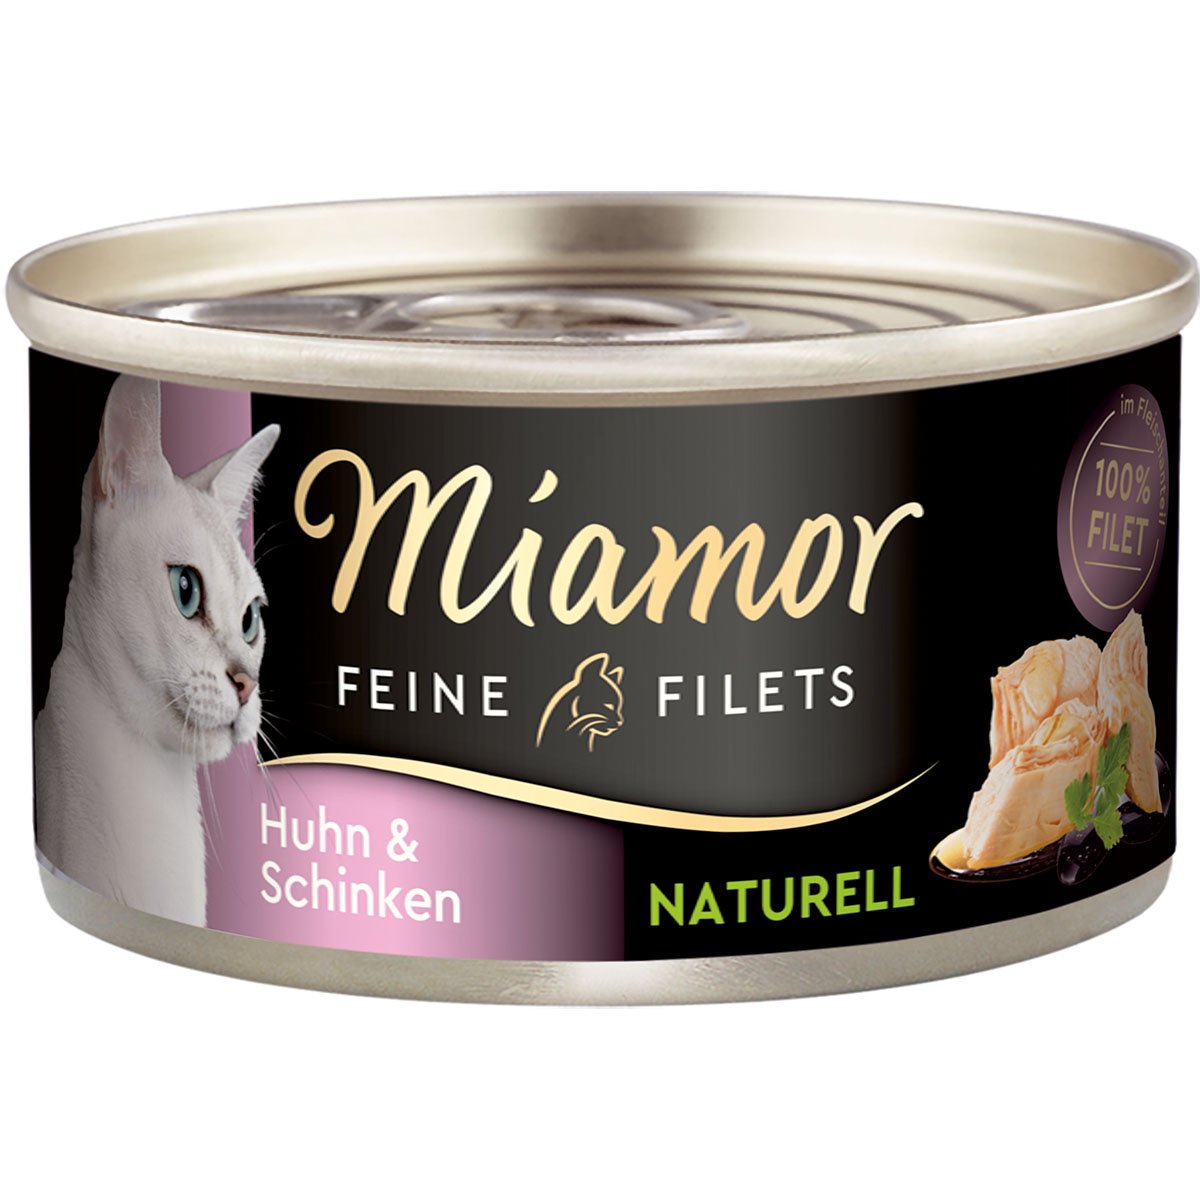 Miamor Feine Filets Naturelle, kuřecí maso a šunka, 80g plechovka 48× 80 g